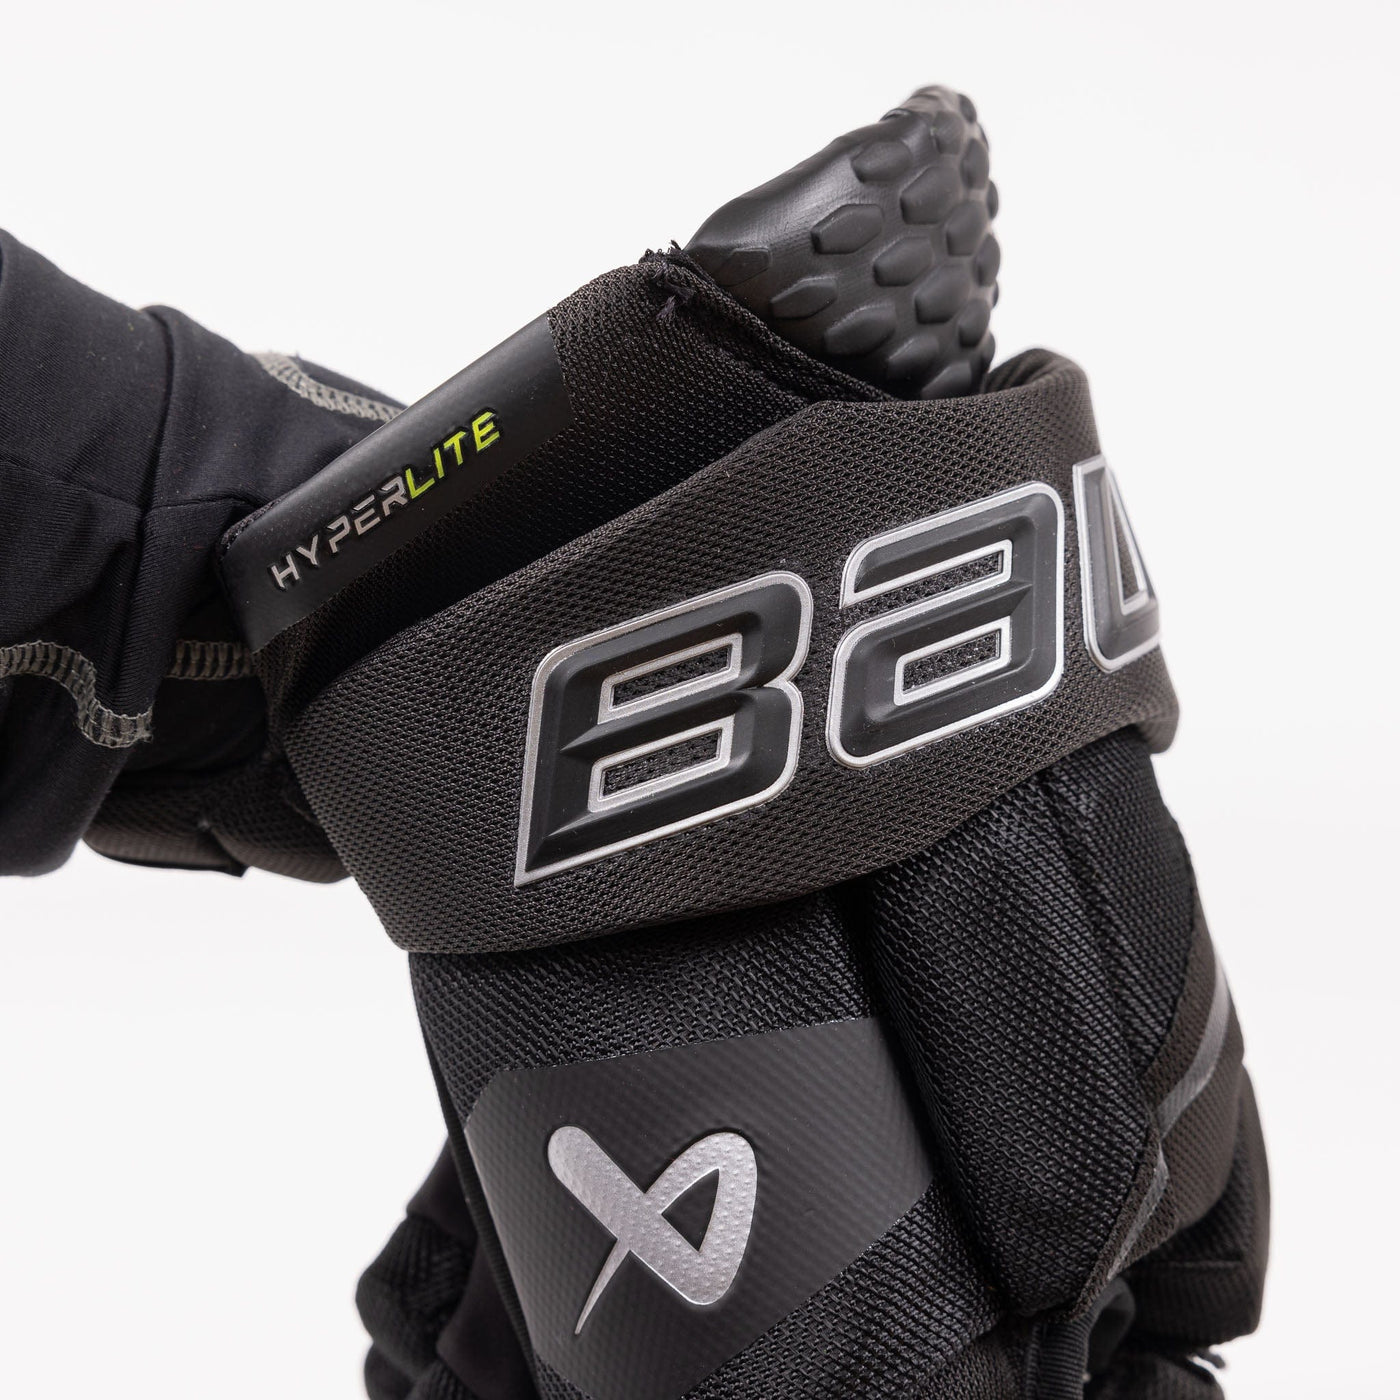 Bauer Vapor Hyperlite Senior Hockey Gloves - The Hockey Shop Source For Sports